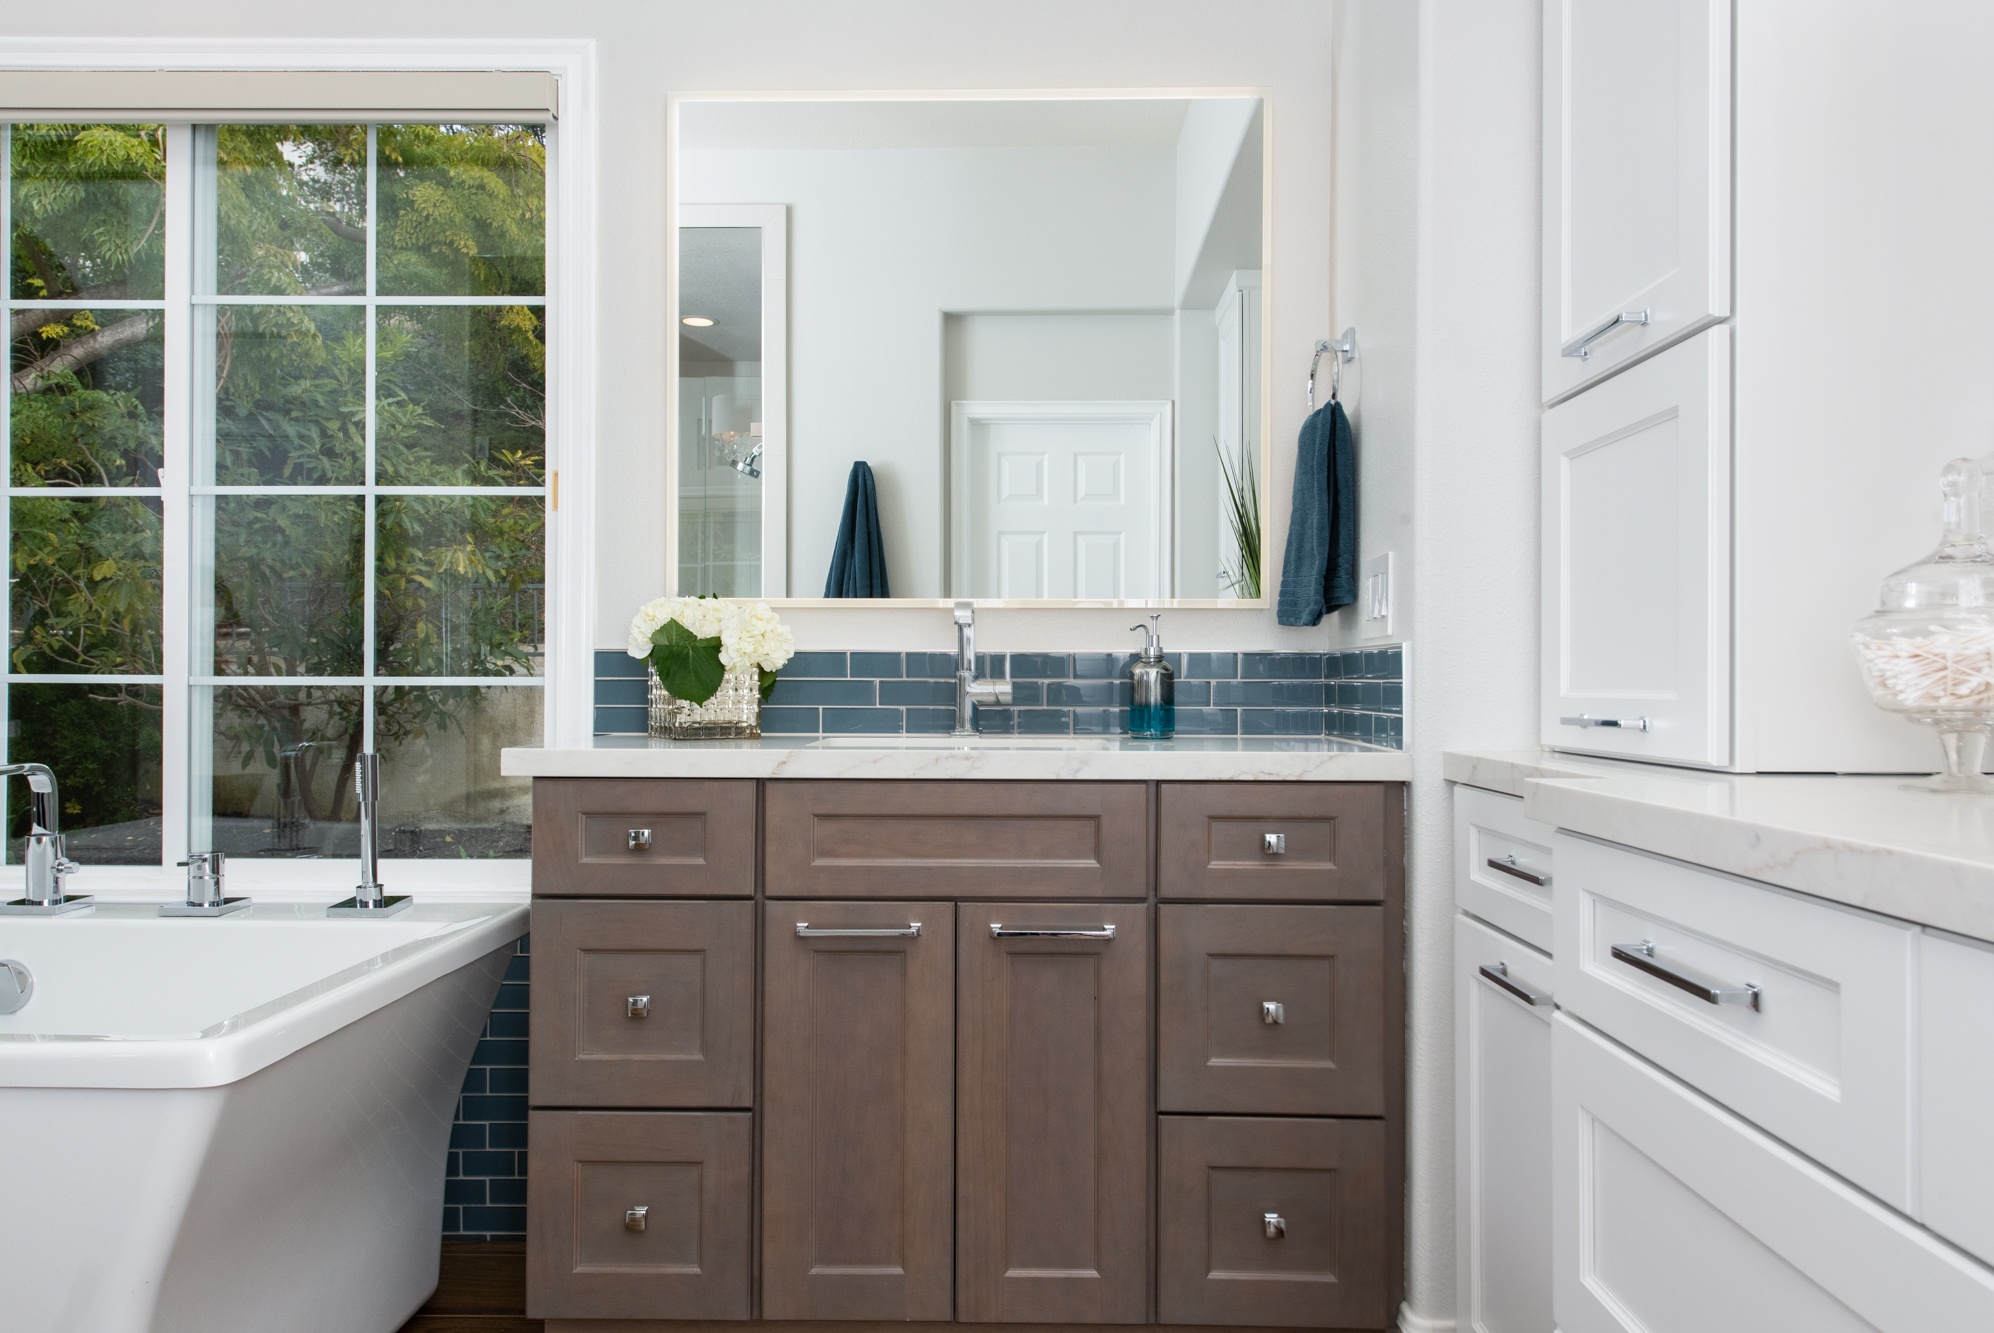 Blue-shining-glass-backsplash-tile-design-in-Rancho-Santa-Margarita-master-bathroom-remodel - smart bathroom trends